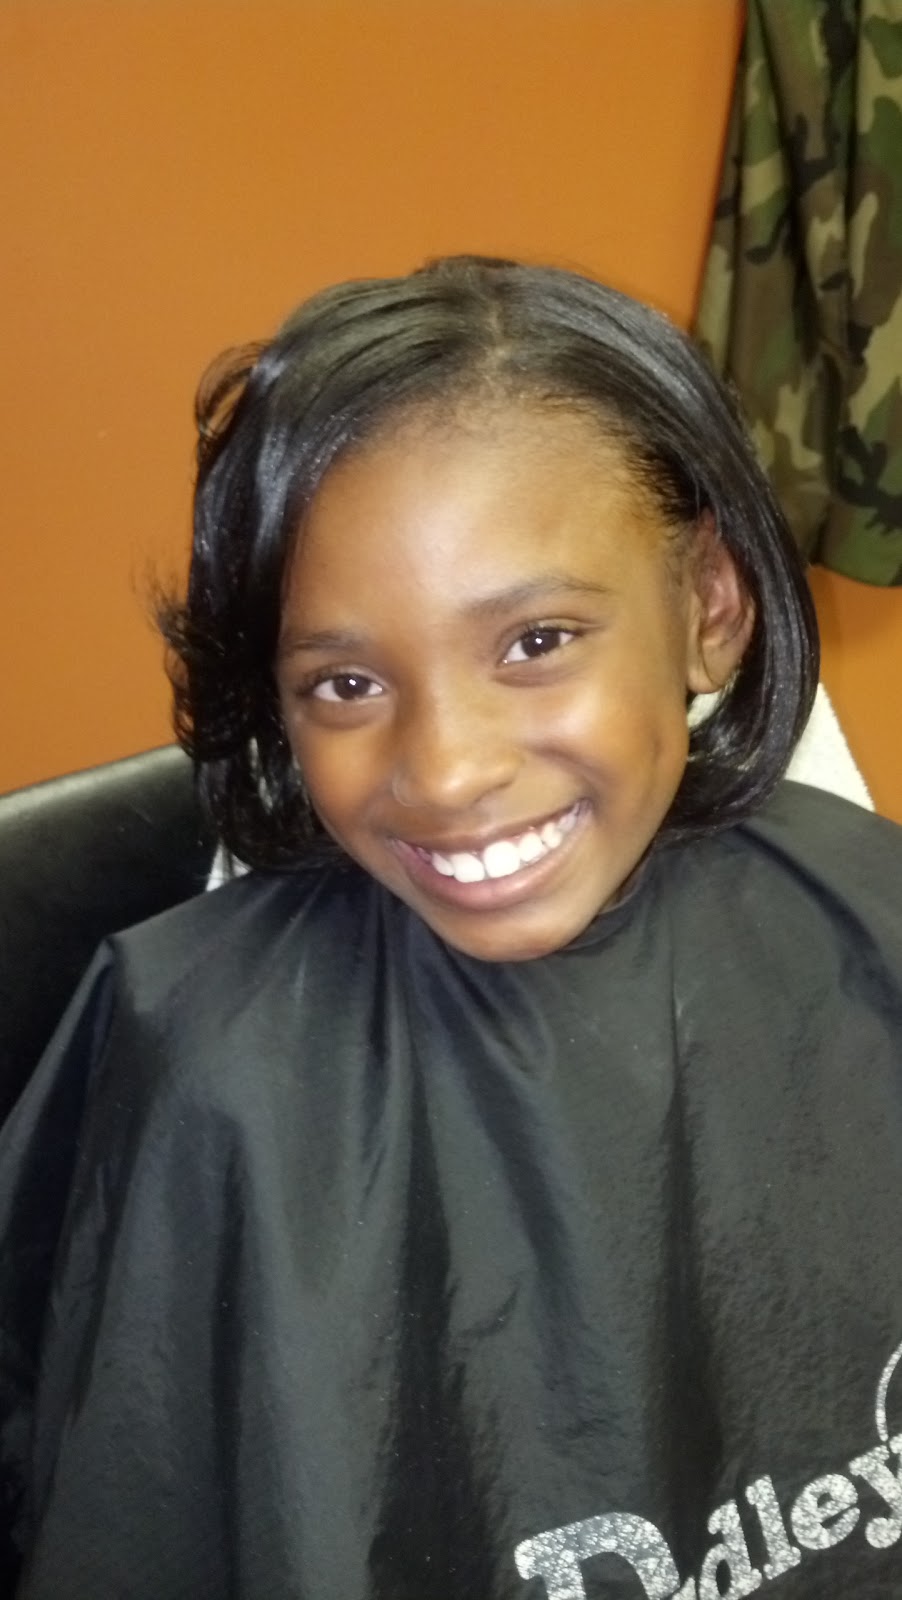 Elite Hair Enhancement &Trichology Clinic | 3411 W Wendover Ave f, Greensboro, NC 27407, USA | Phone: (336) 701-5820